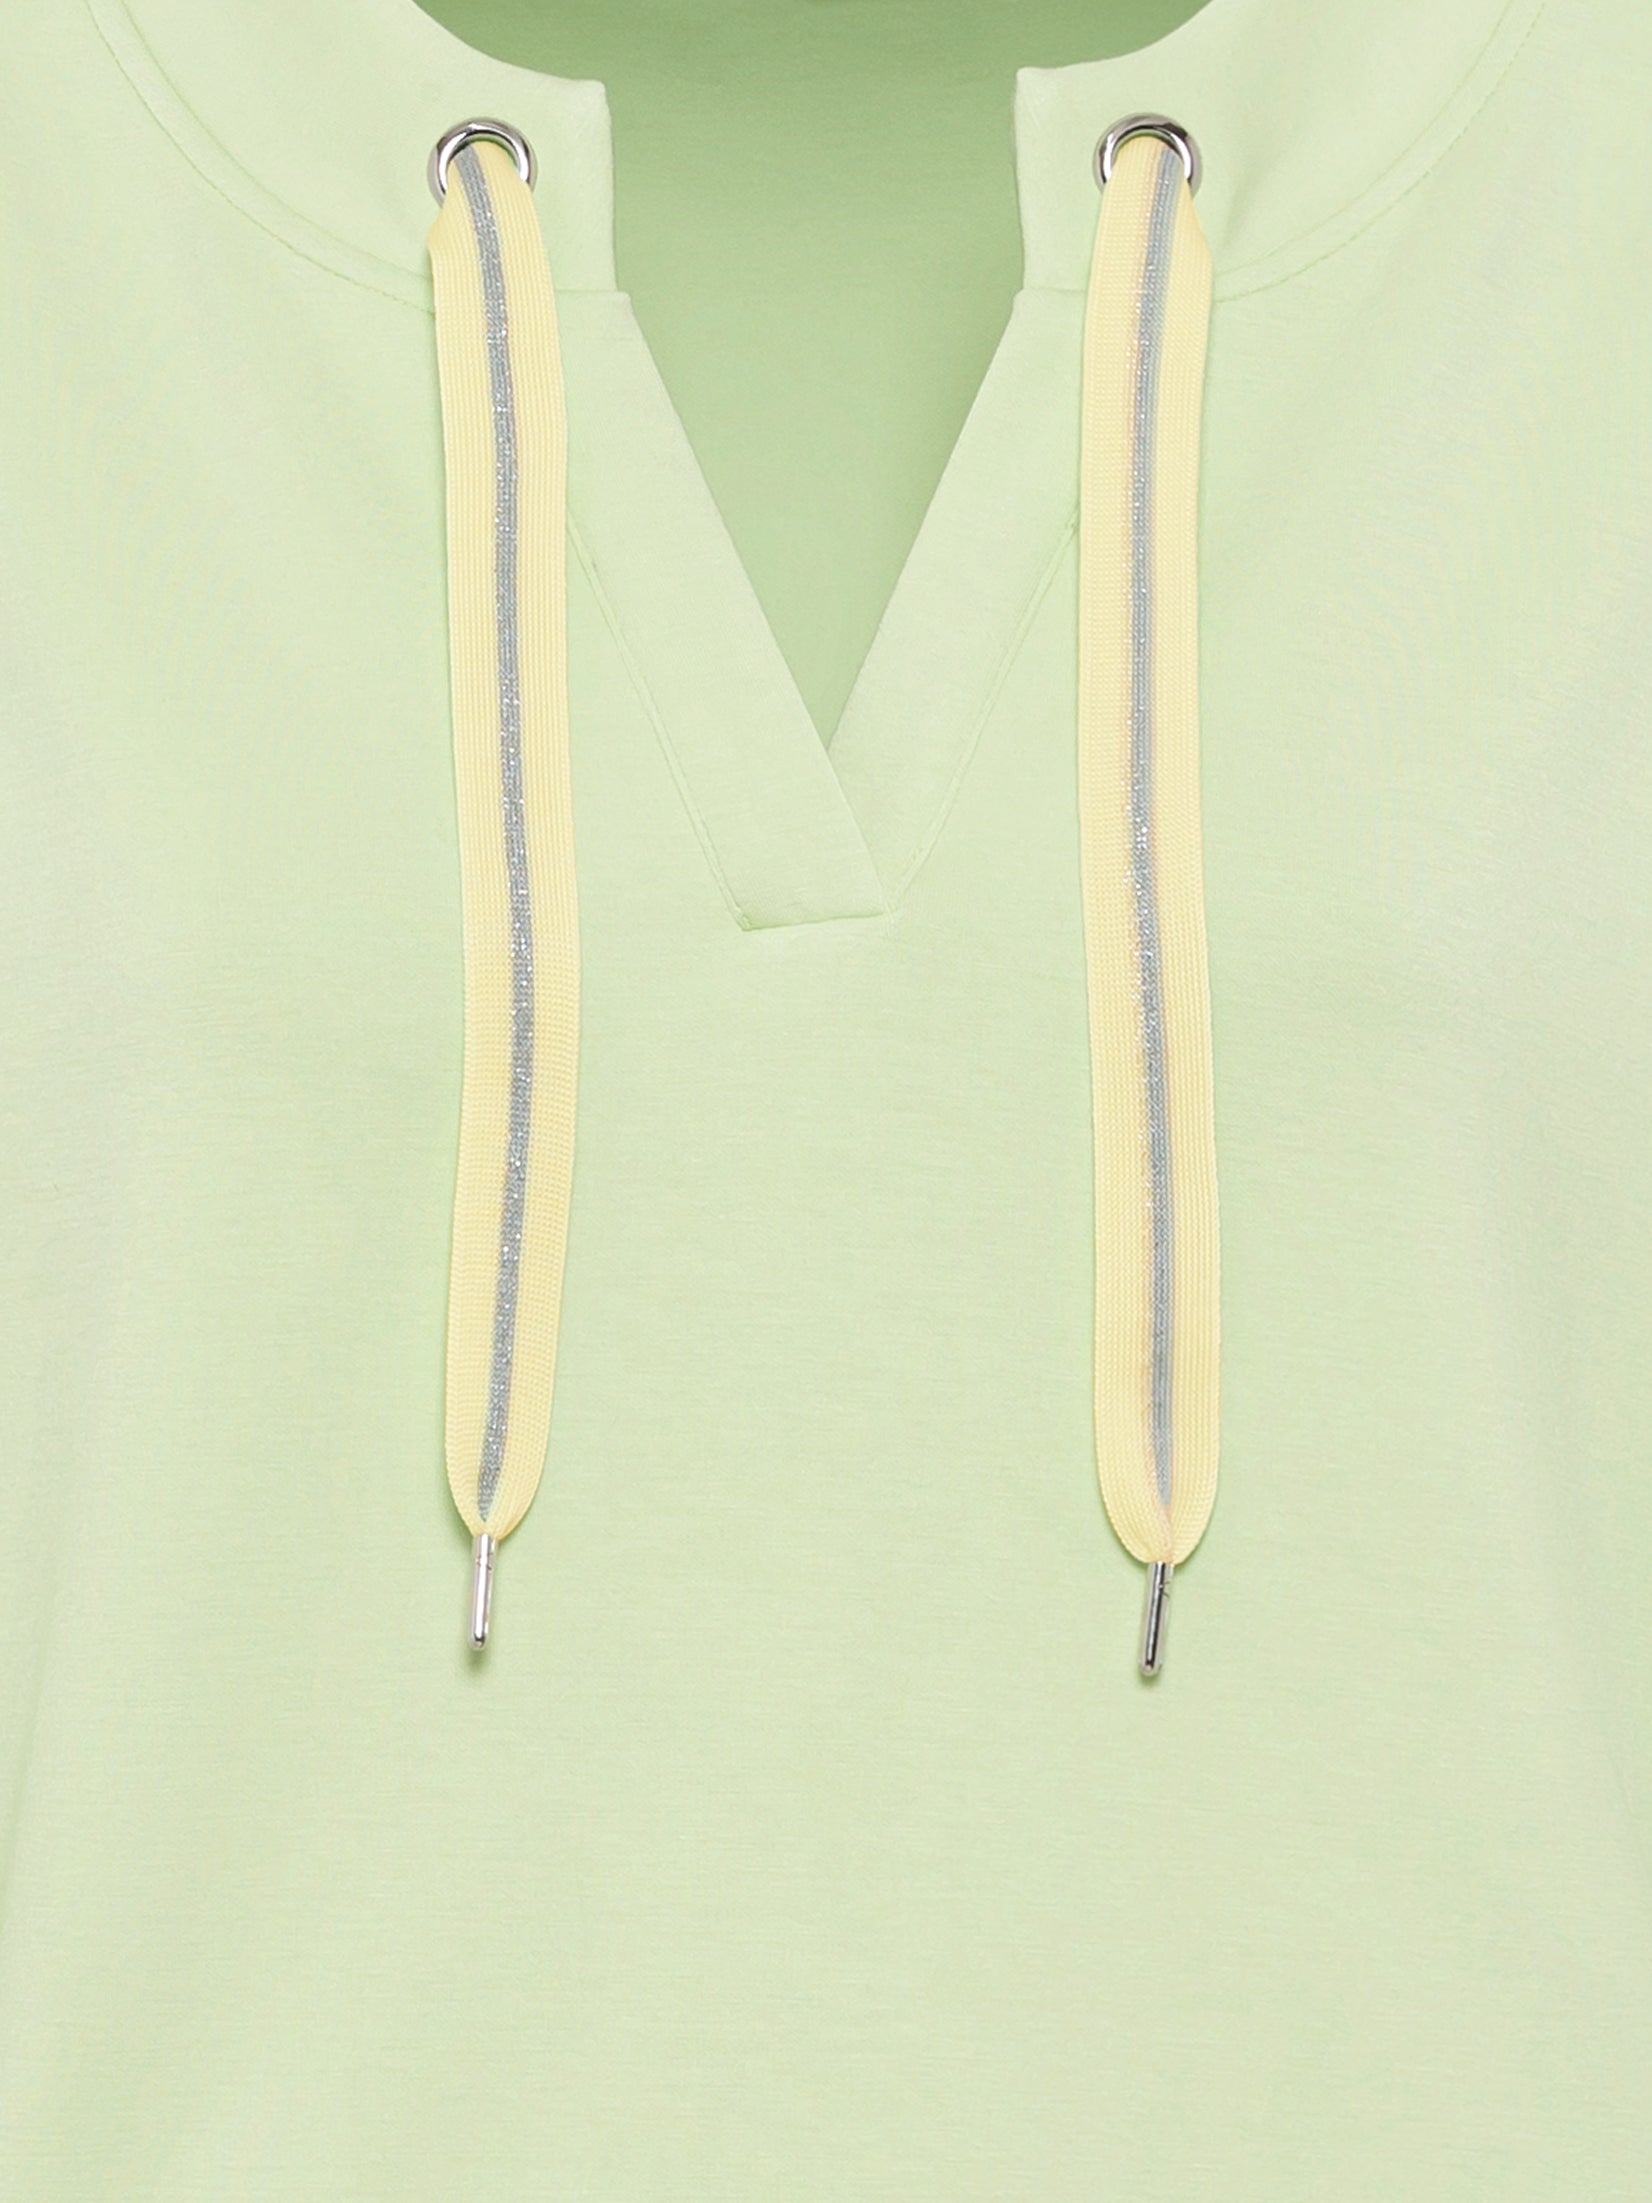 Long Sleeve Sweatshirt in Light Lime